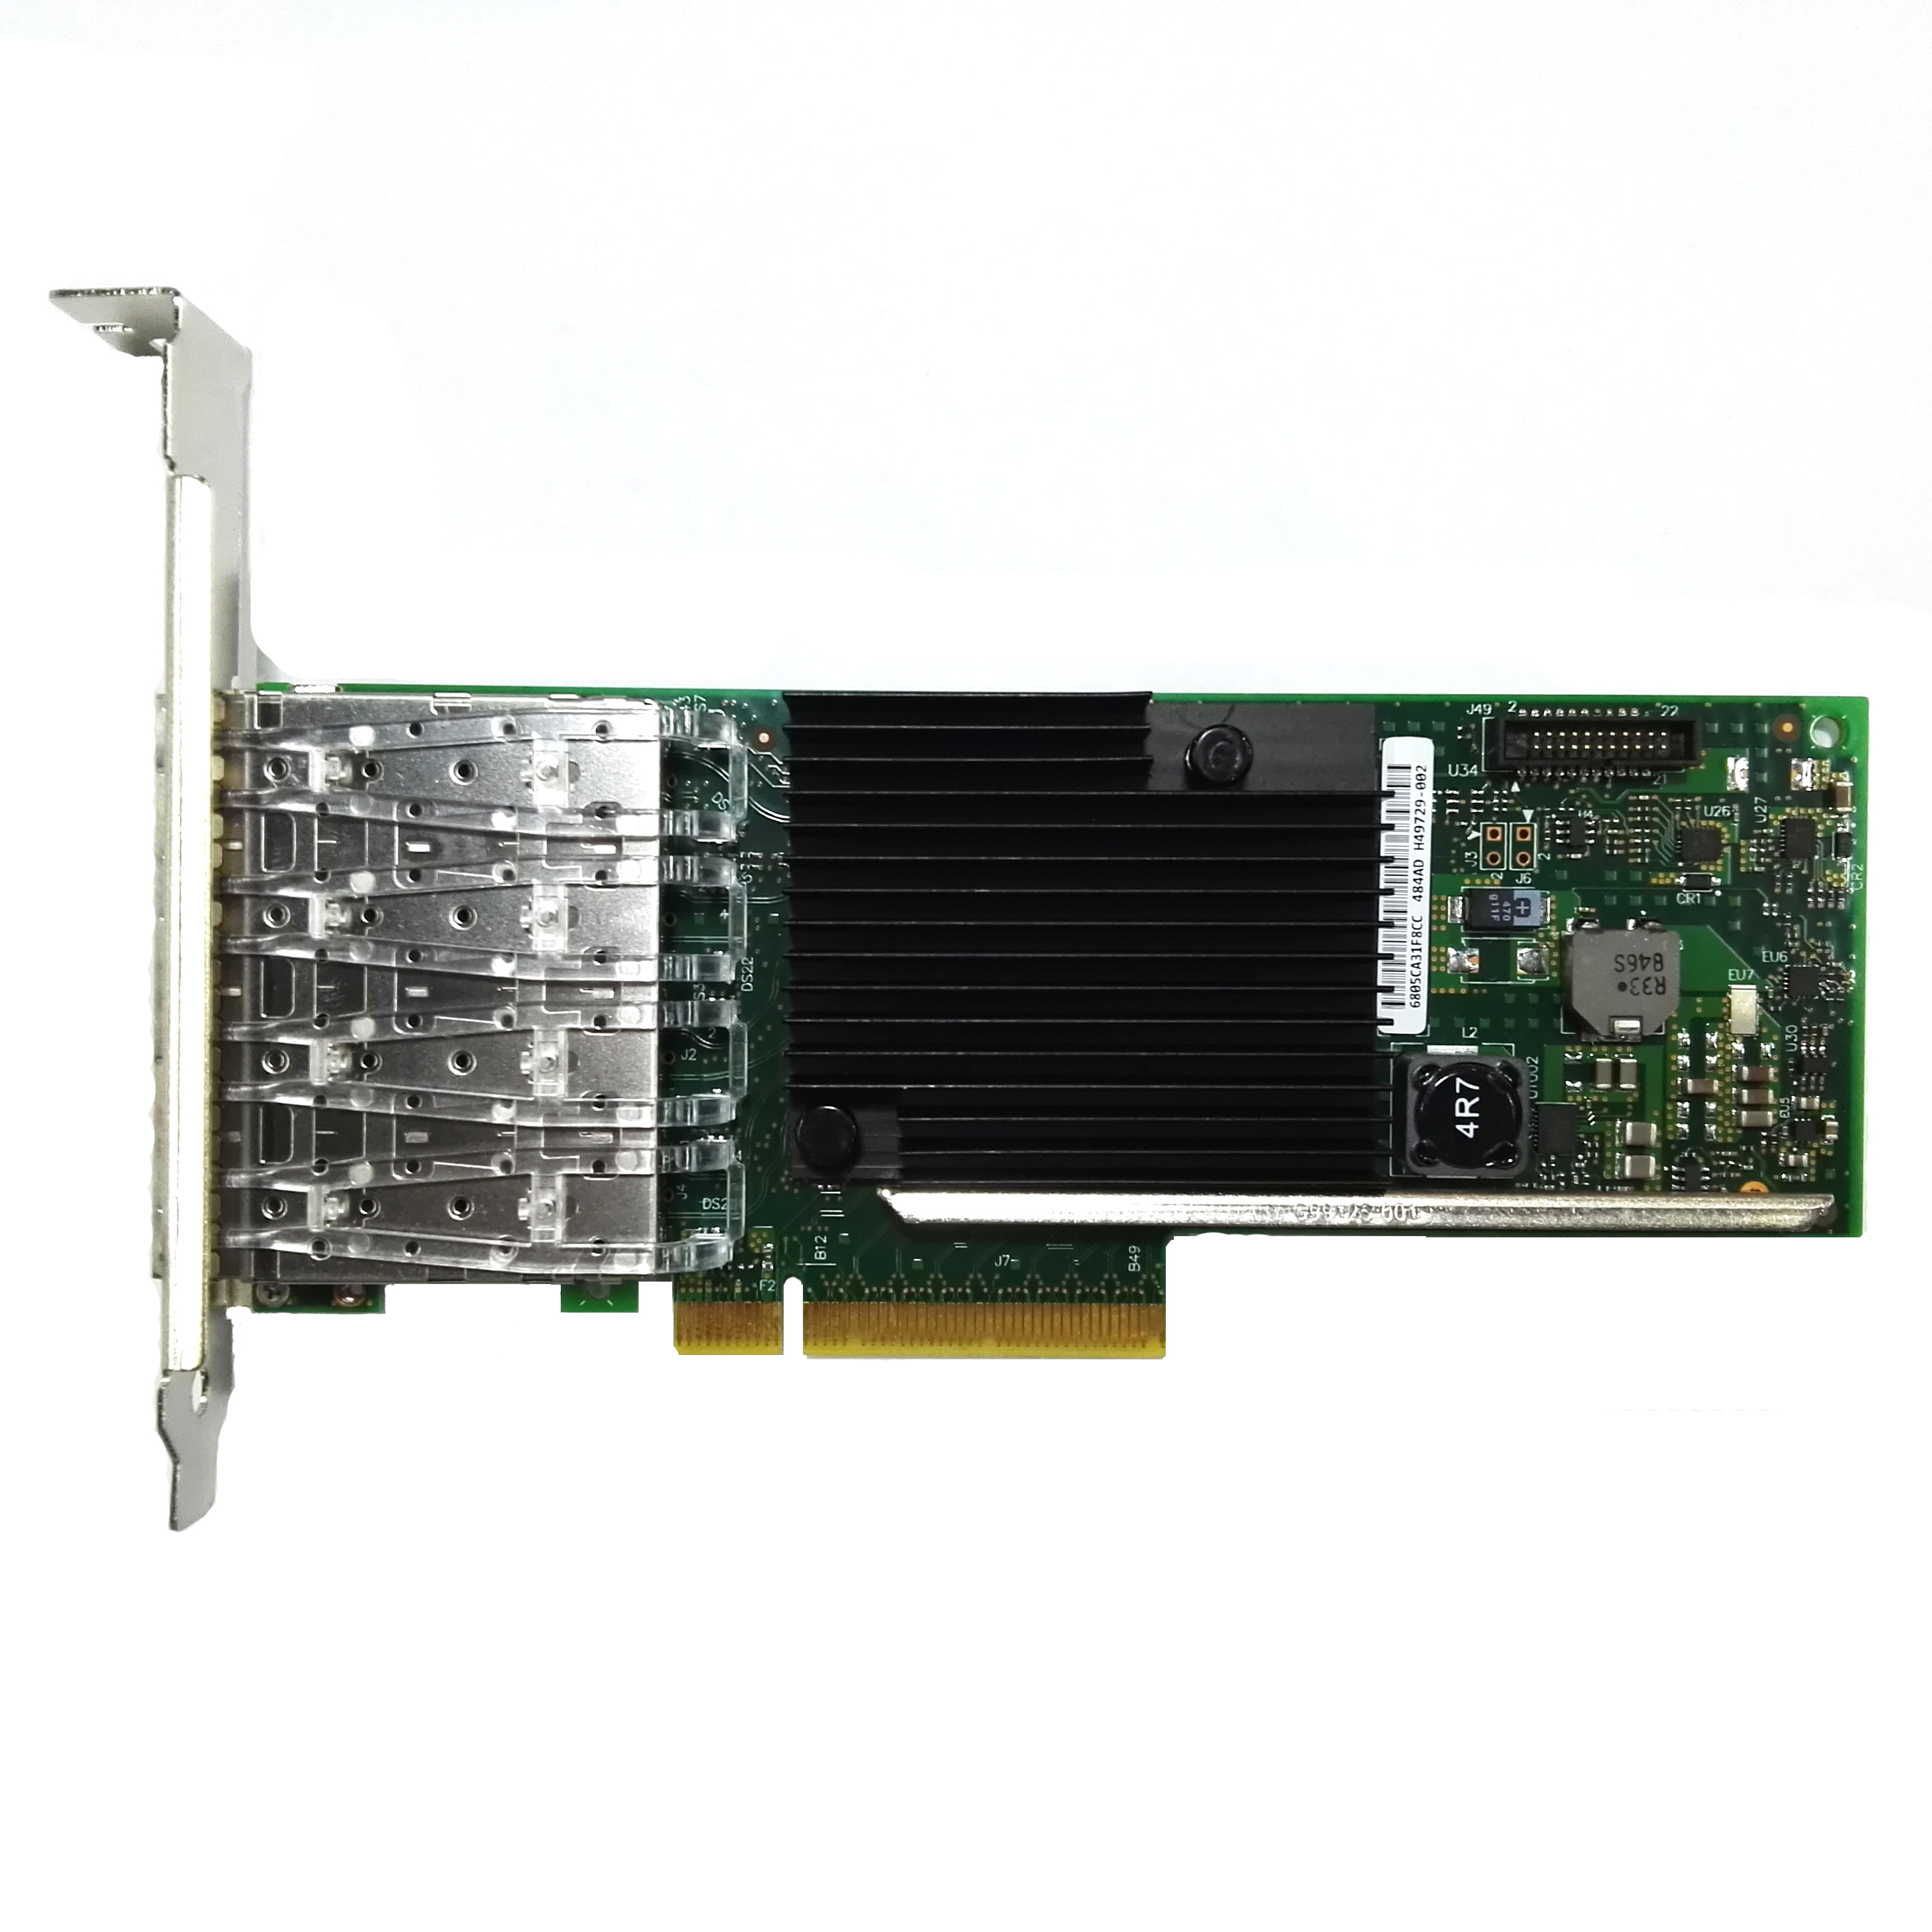 X710-DA4 10Gb/s Quad Port PCI-Express Gen3 x8 Ethernet Converged Network Adapter